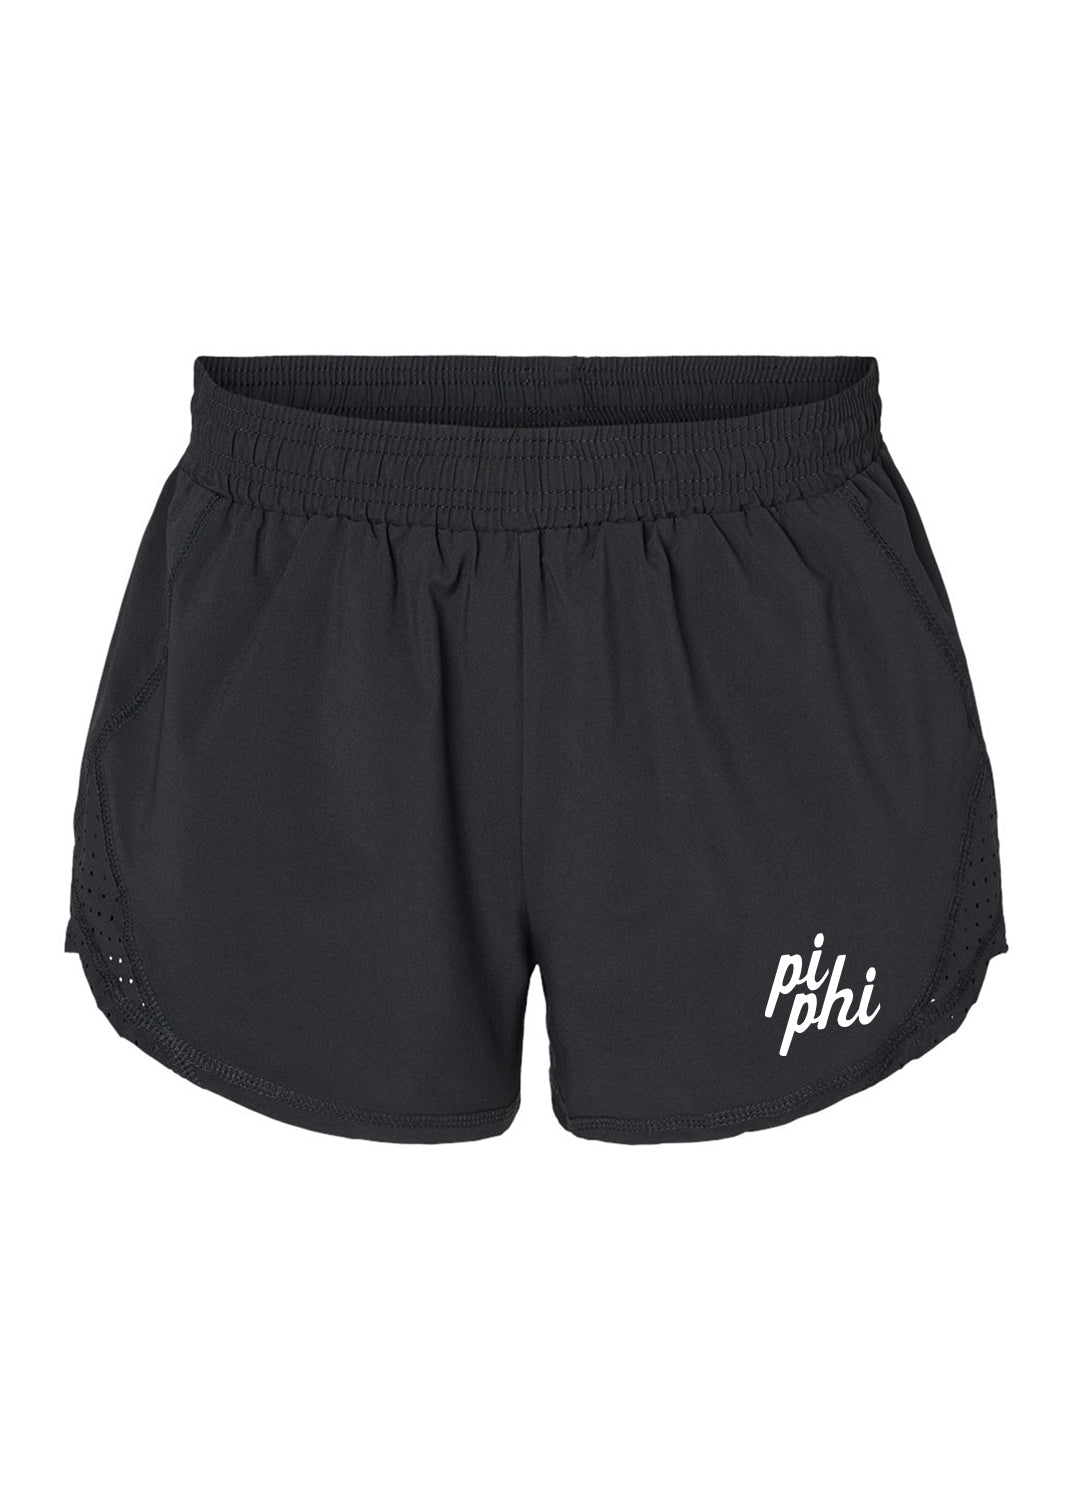 Pi Phi Black Athletic Shorts